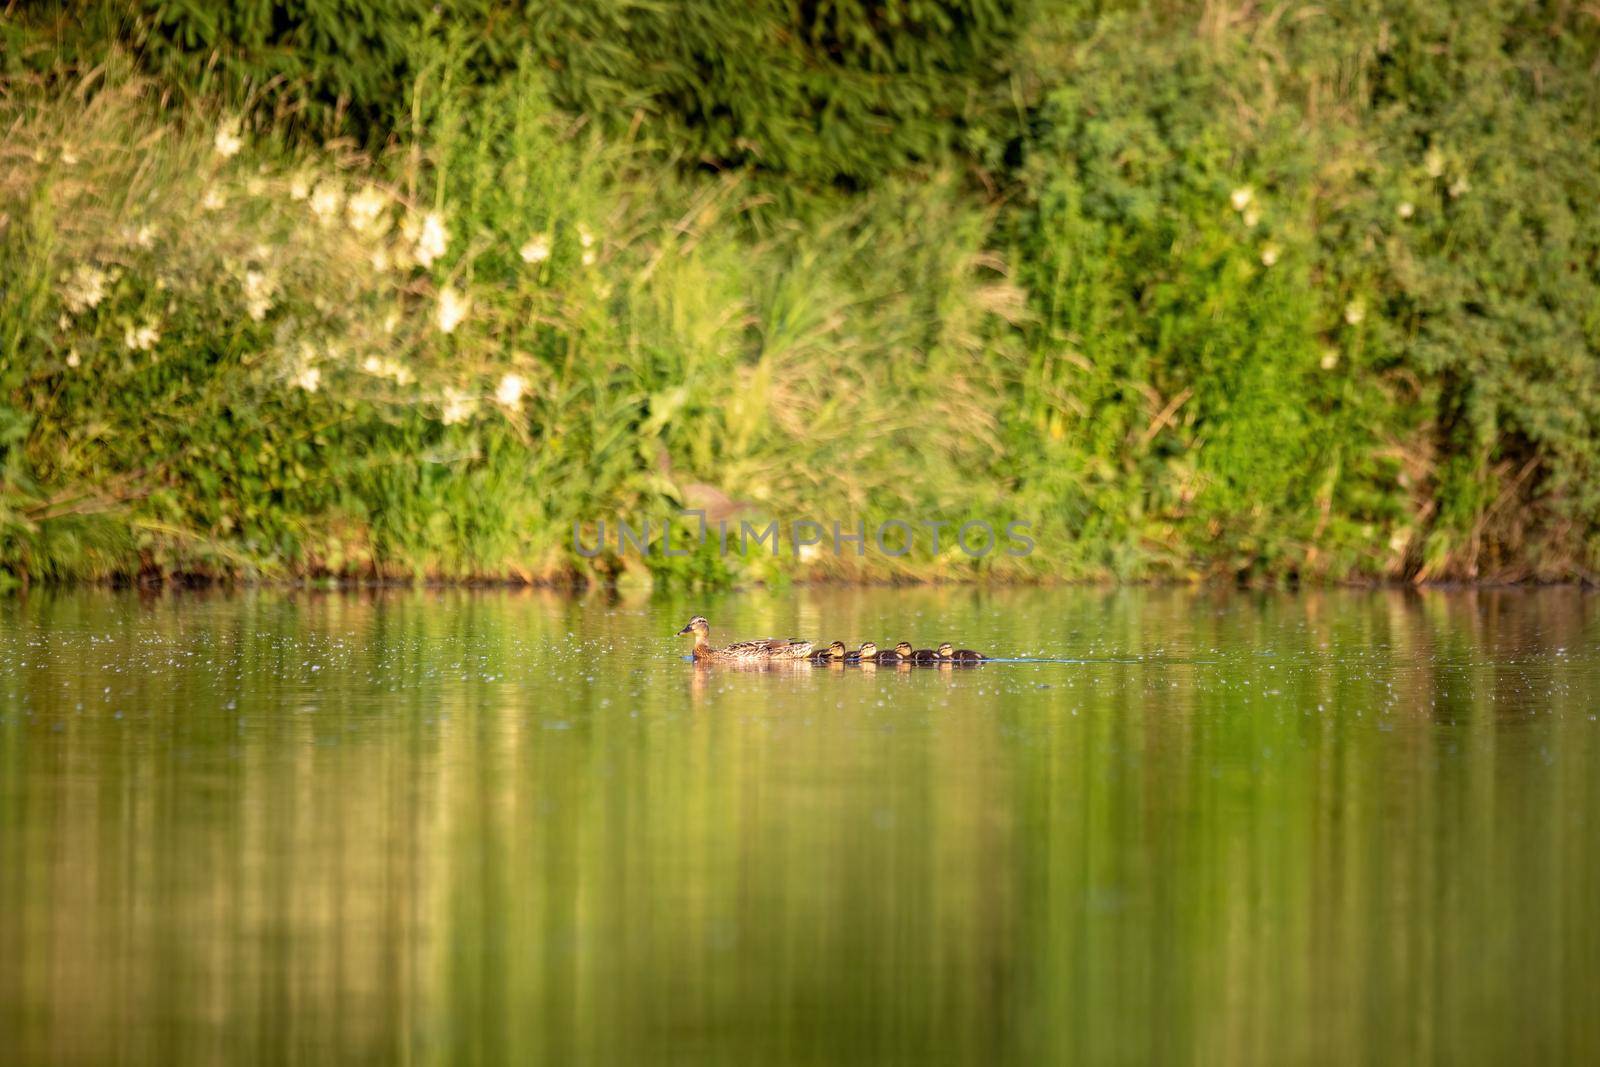 duck mallard on pond, Czech Republic, Europe wildlife by artush